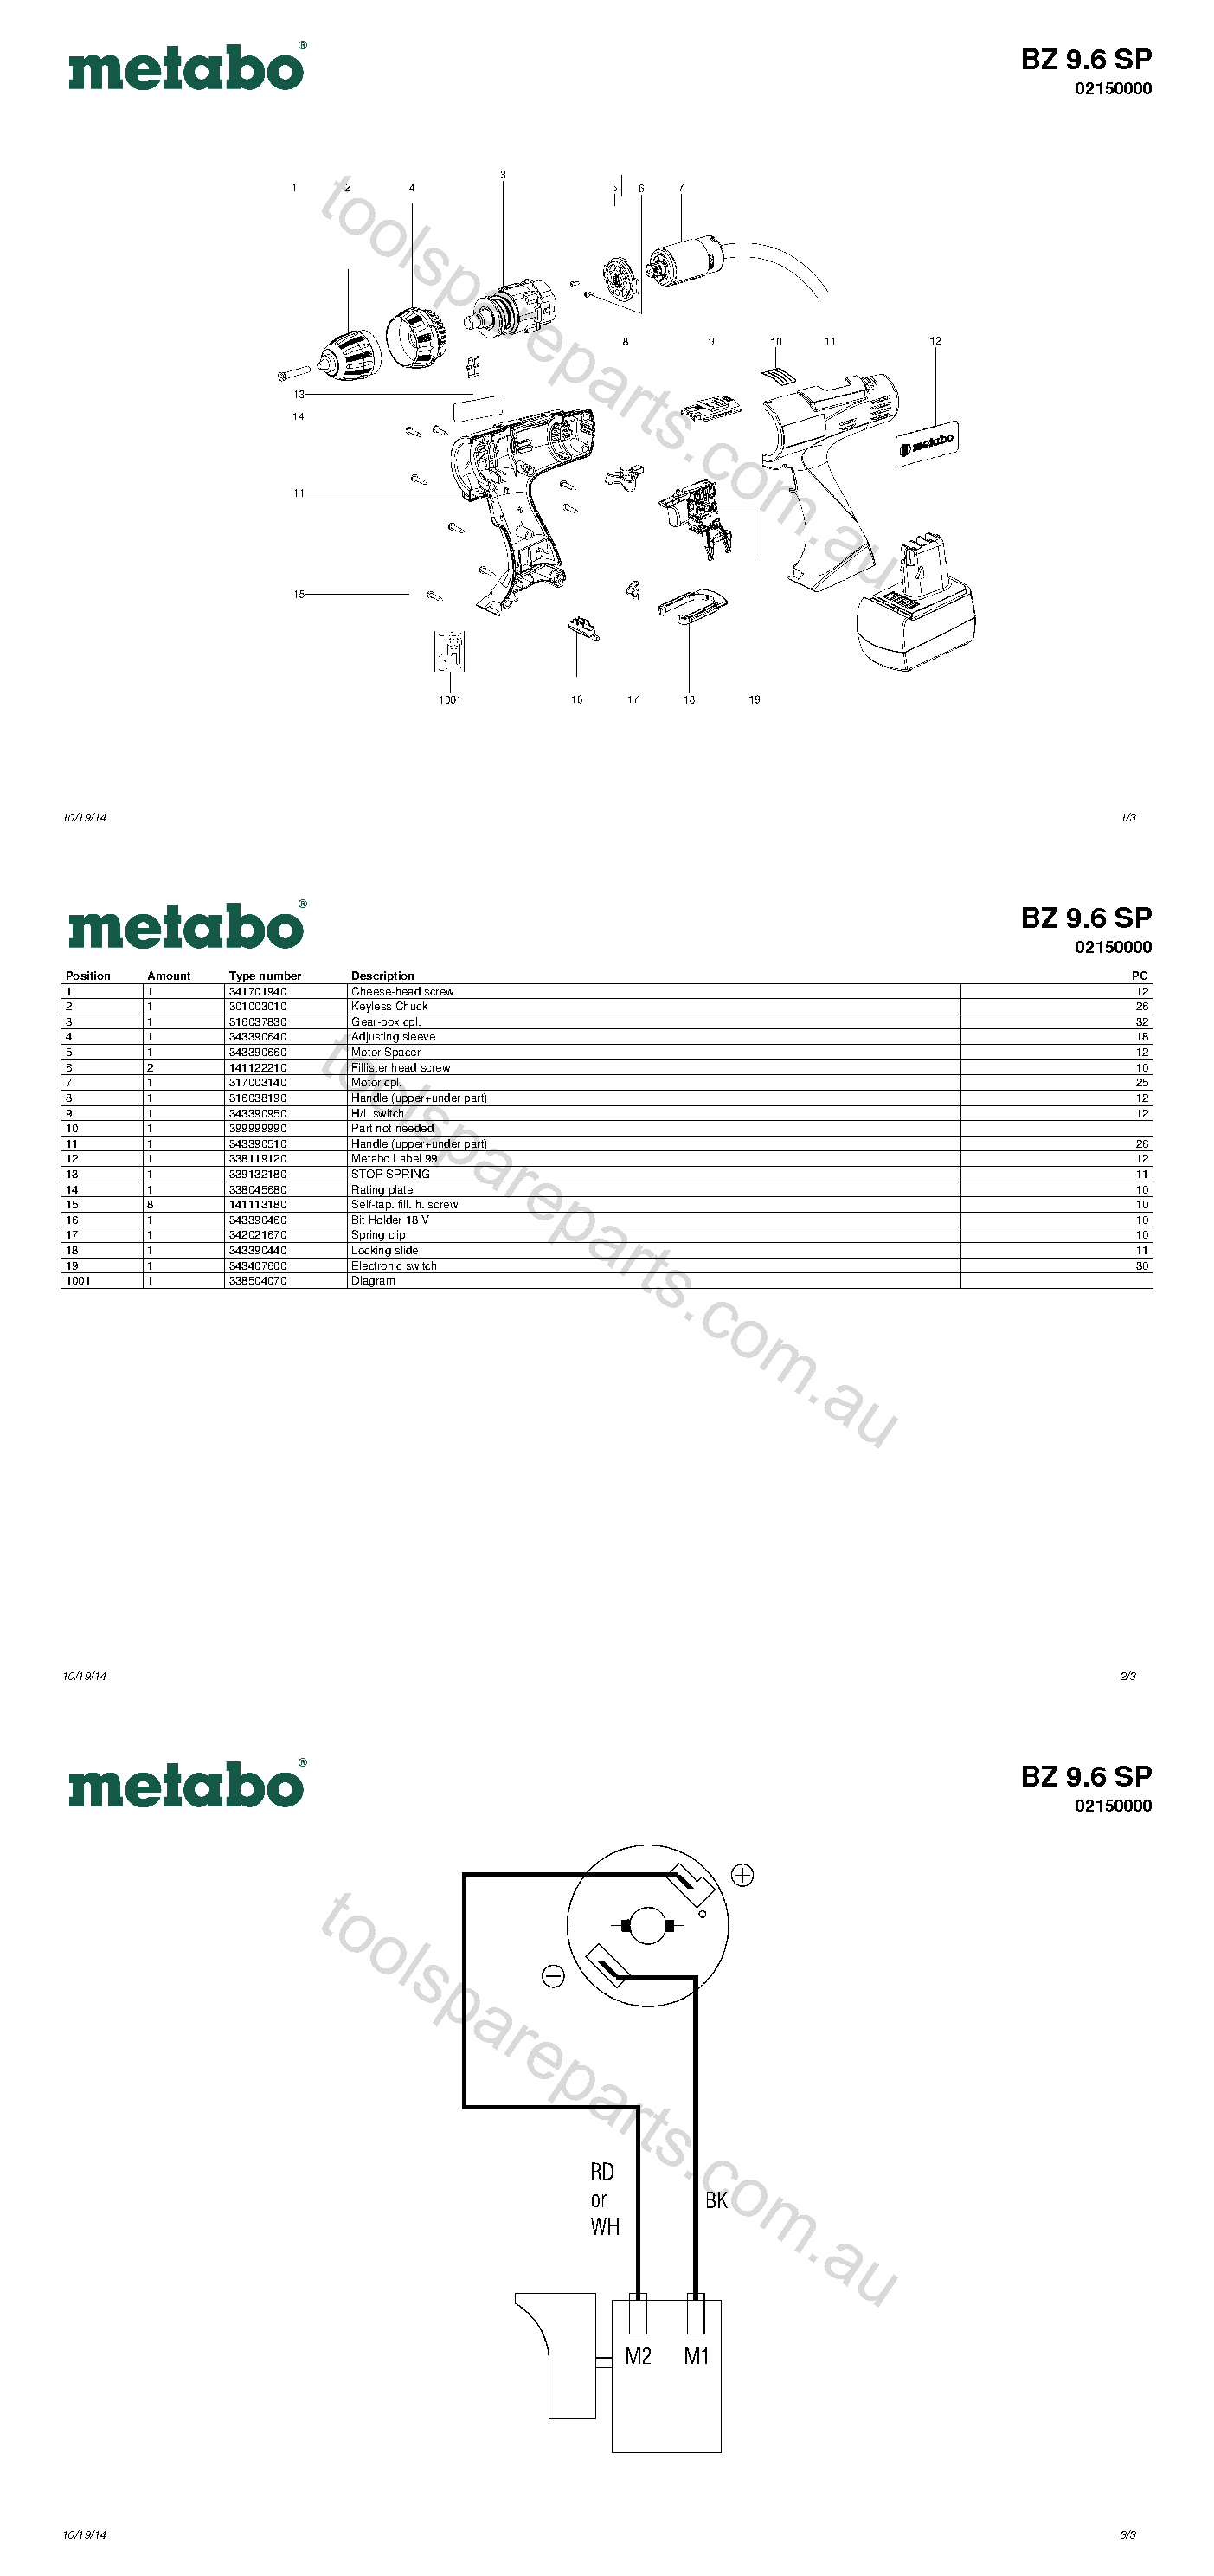 Metabo BZ 9.6 SP 02150000  Diagram 1